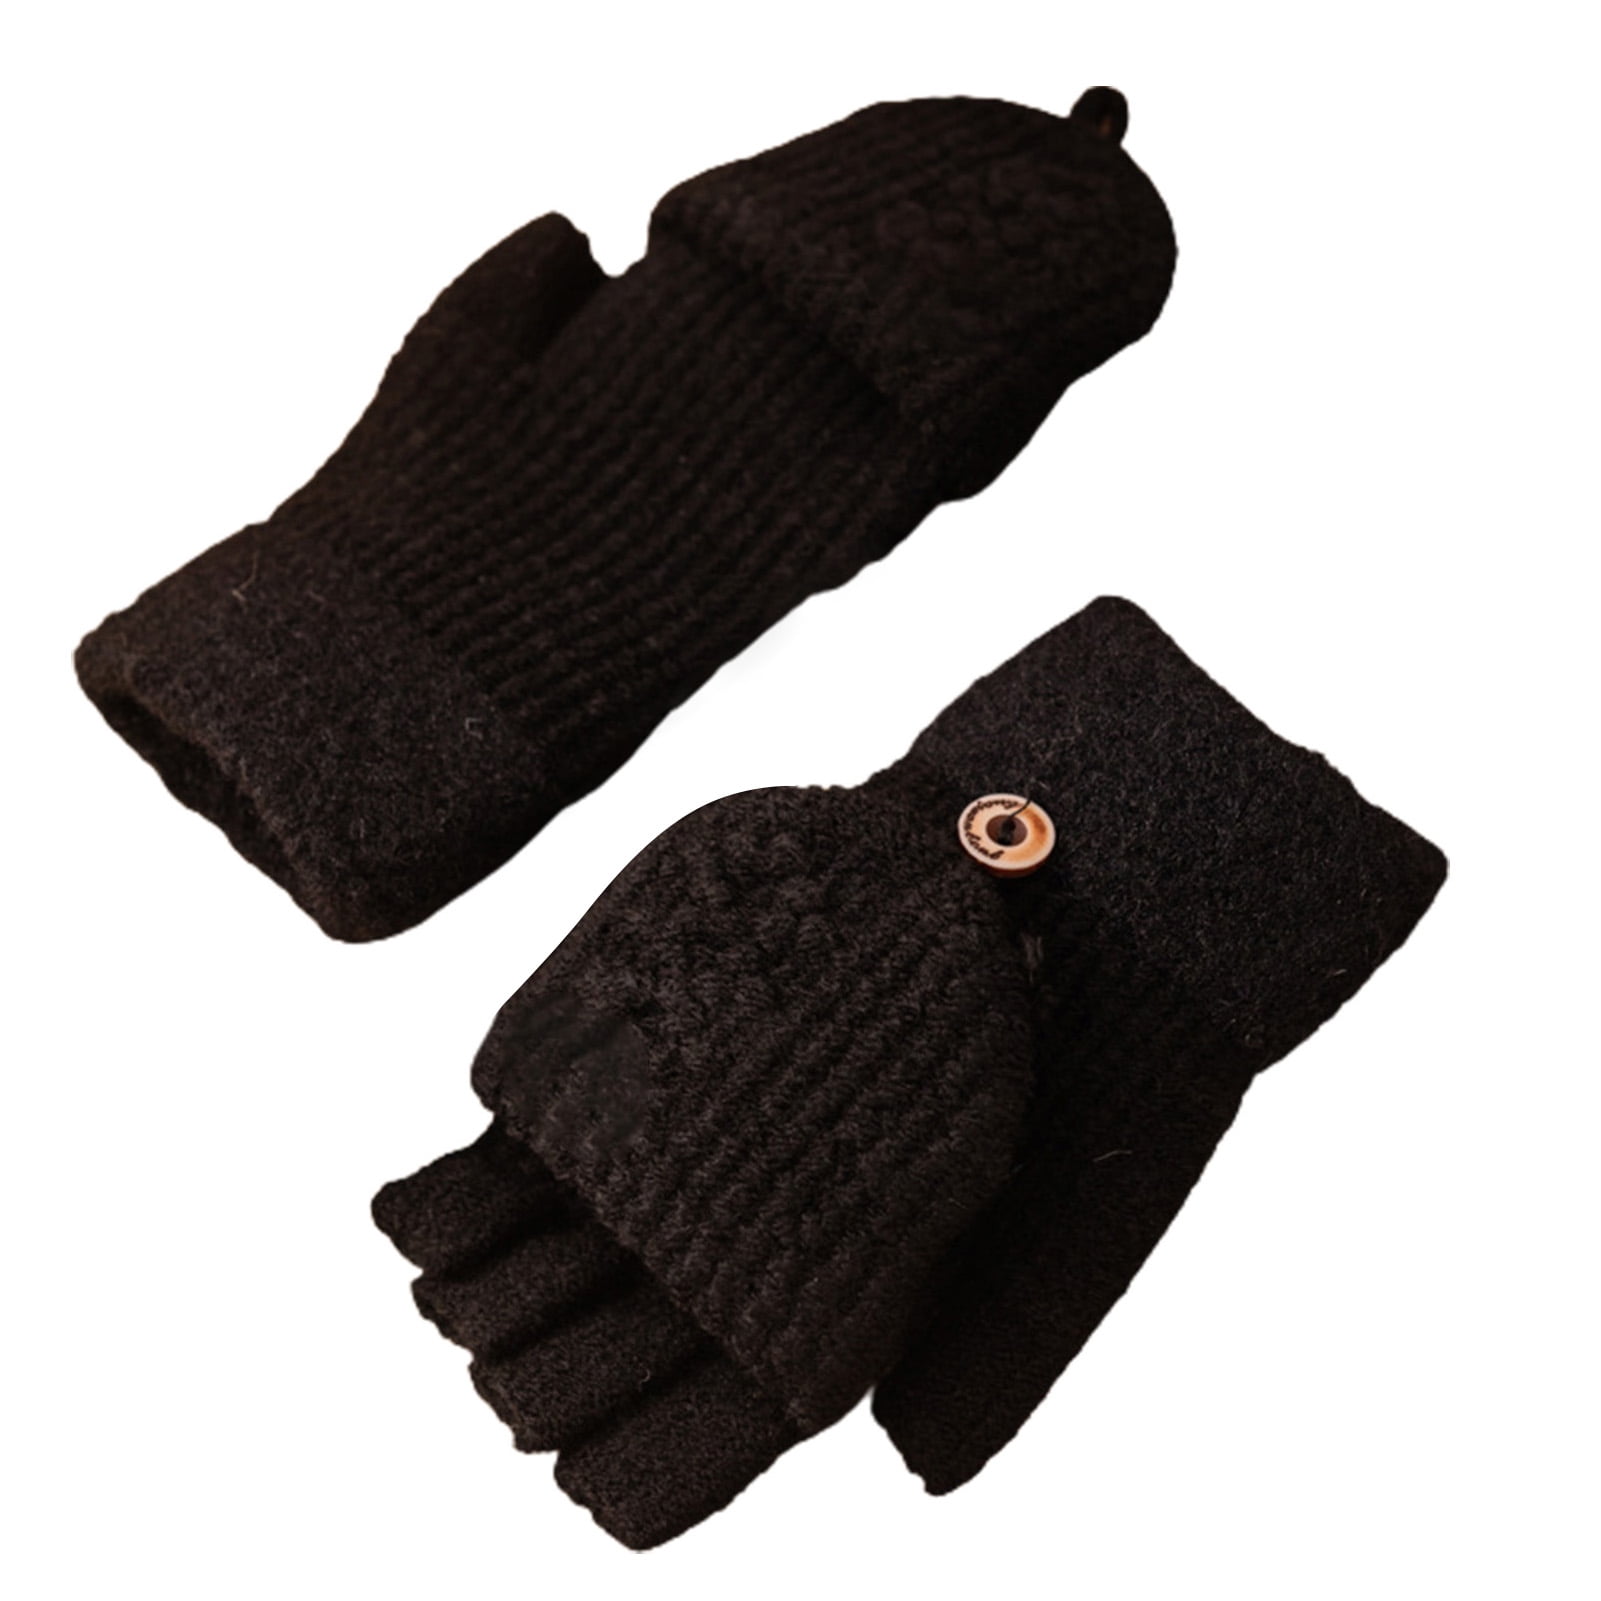 Fingerless Flip Mitten Convertible Mittens Girls\' Kids Gloves Soft Cold Weather with Winter Gloves Teens Kids Gloves Glove for Children Knitted Knit Warm Top Boys\' Cover